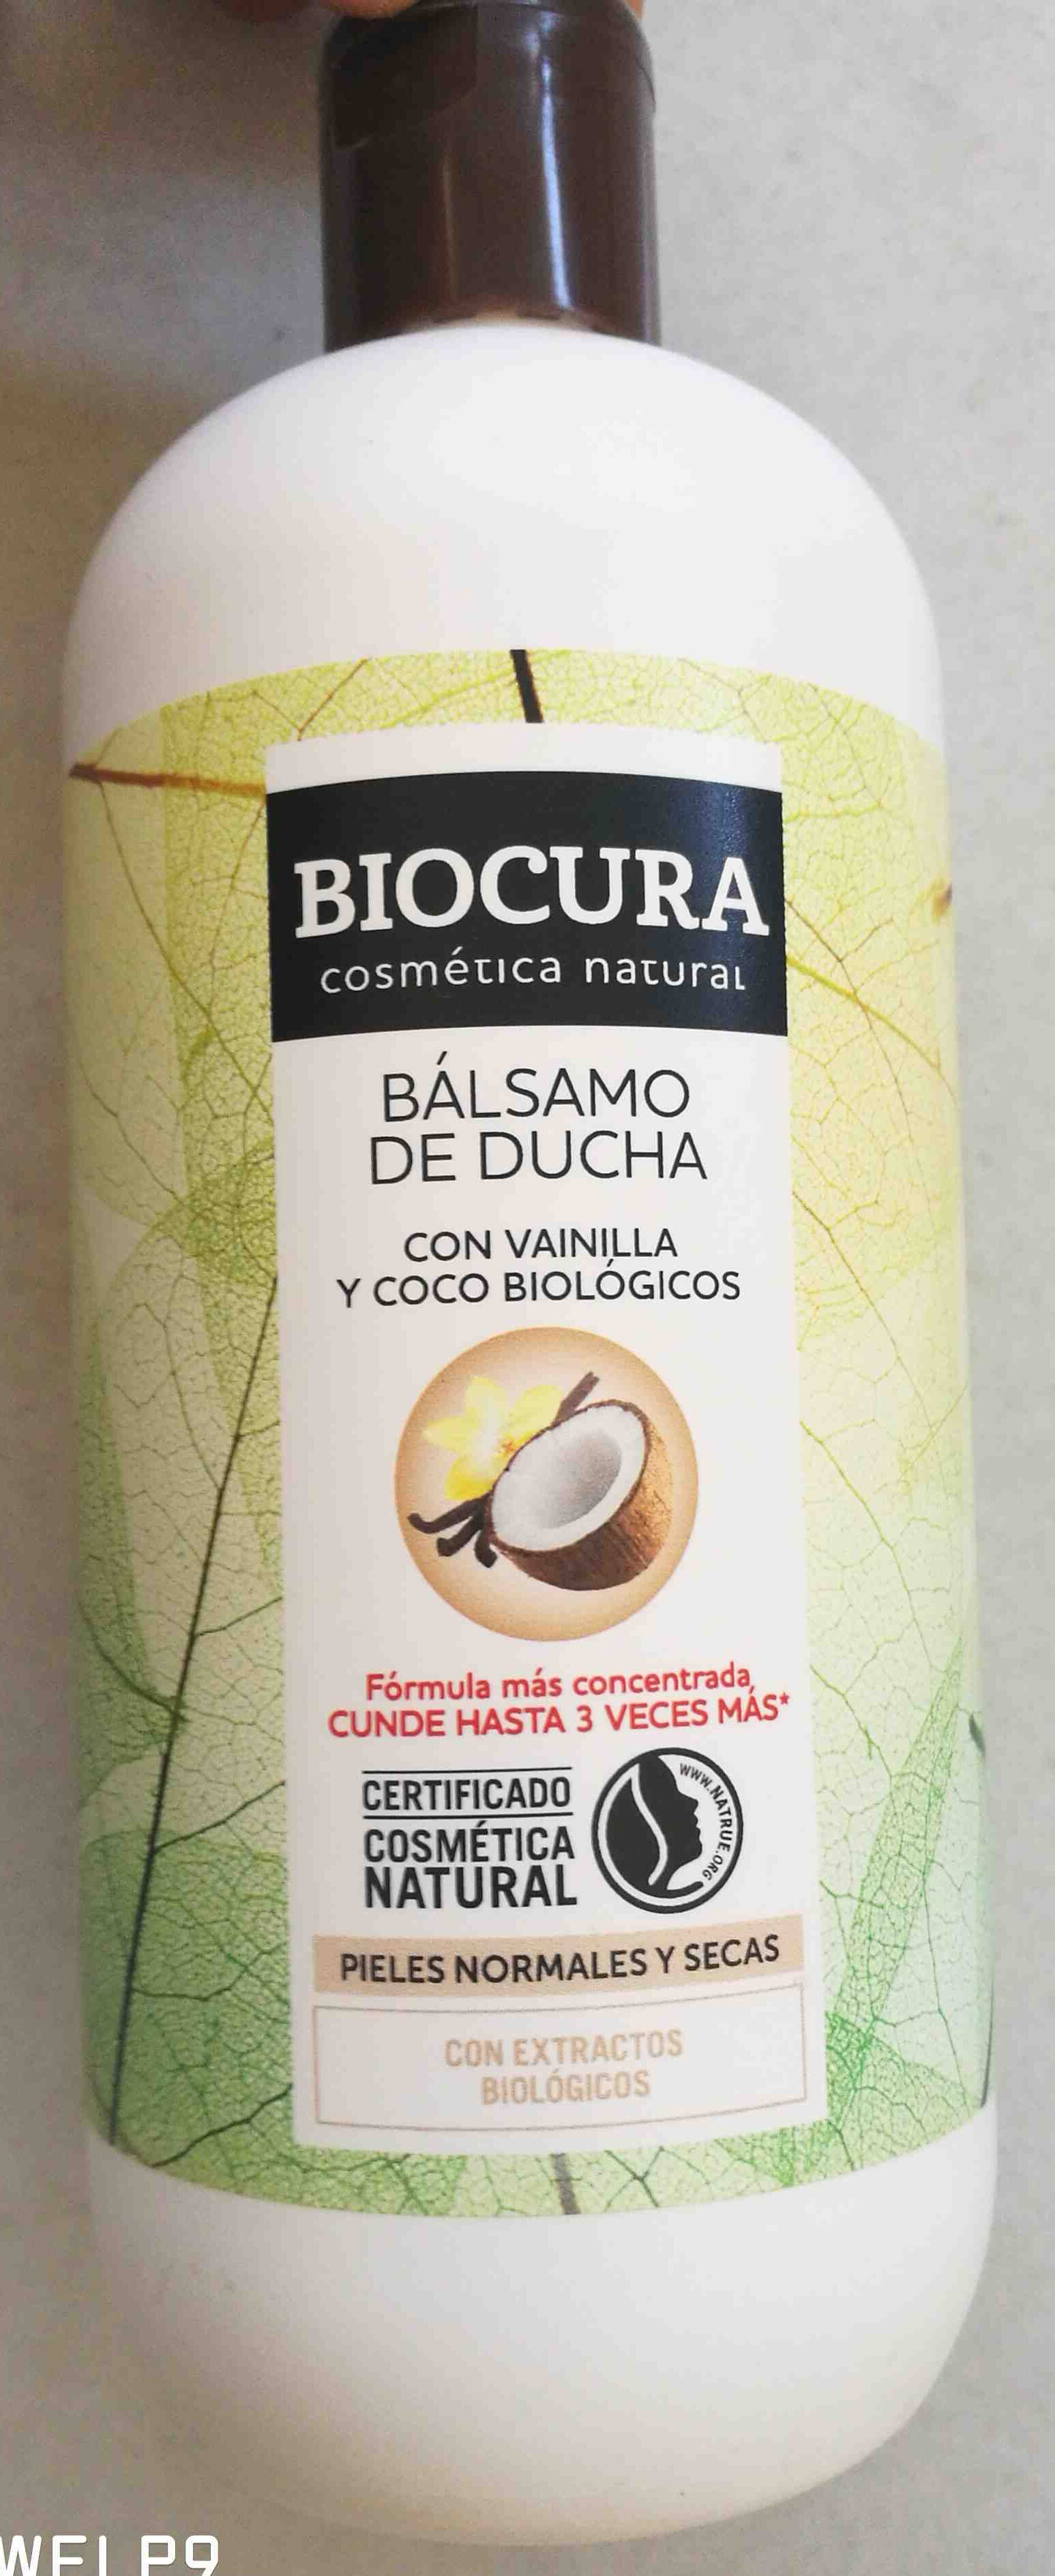 Balsamo de ducha Biocura Aldi - Produit - en